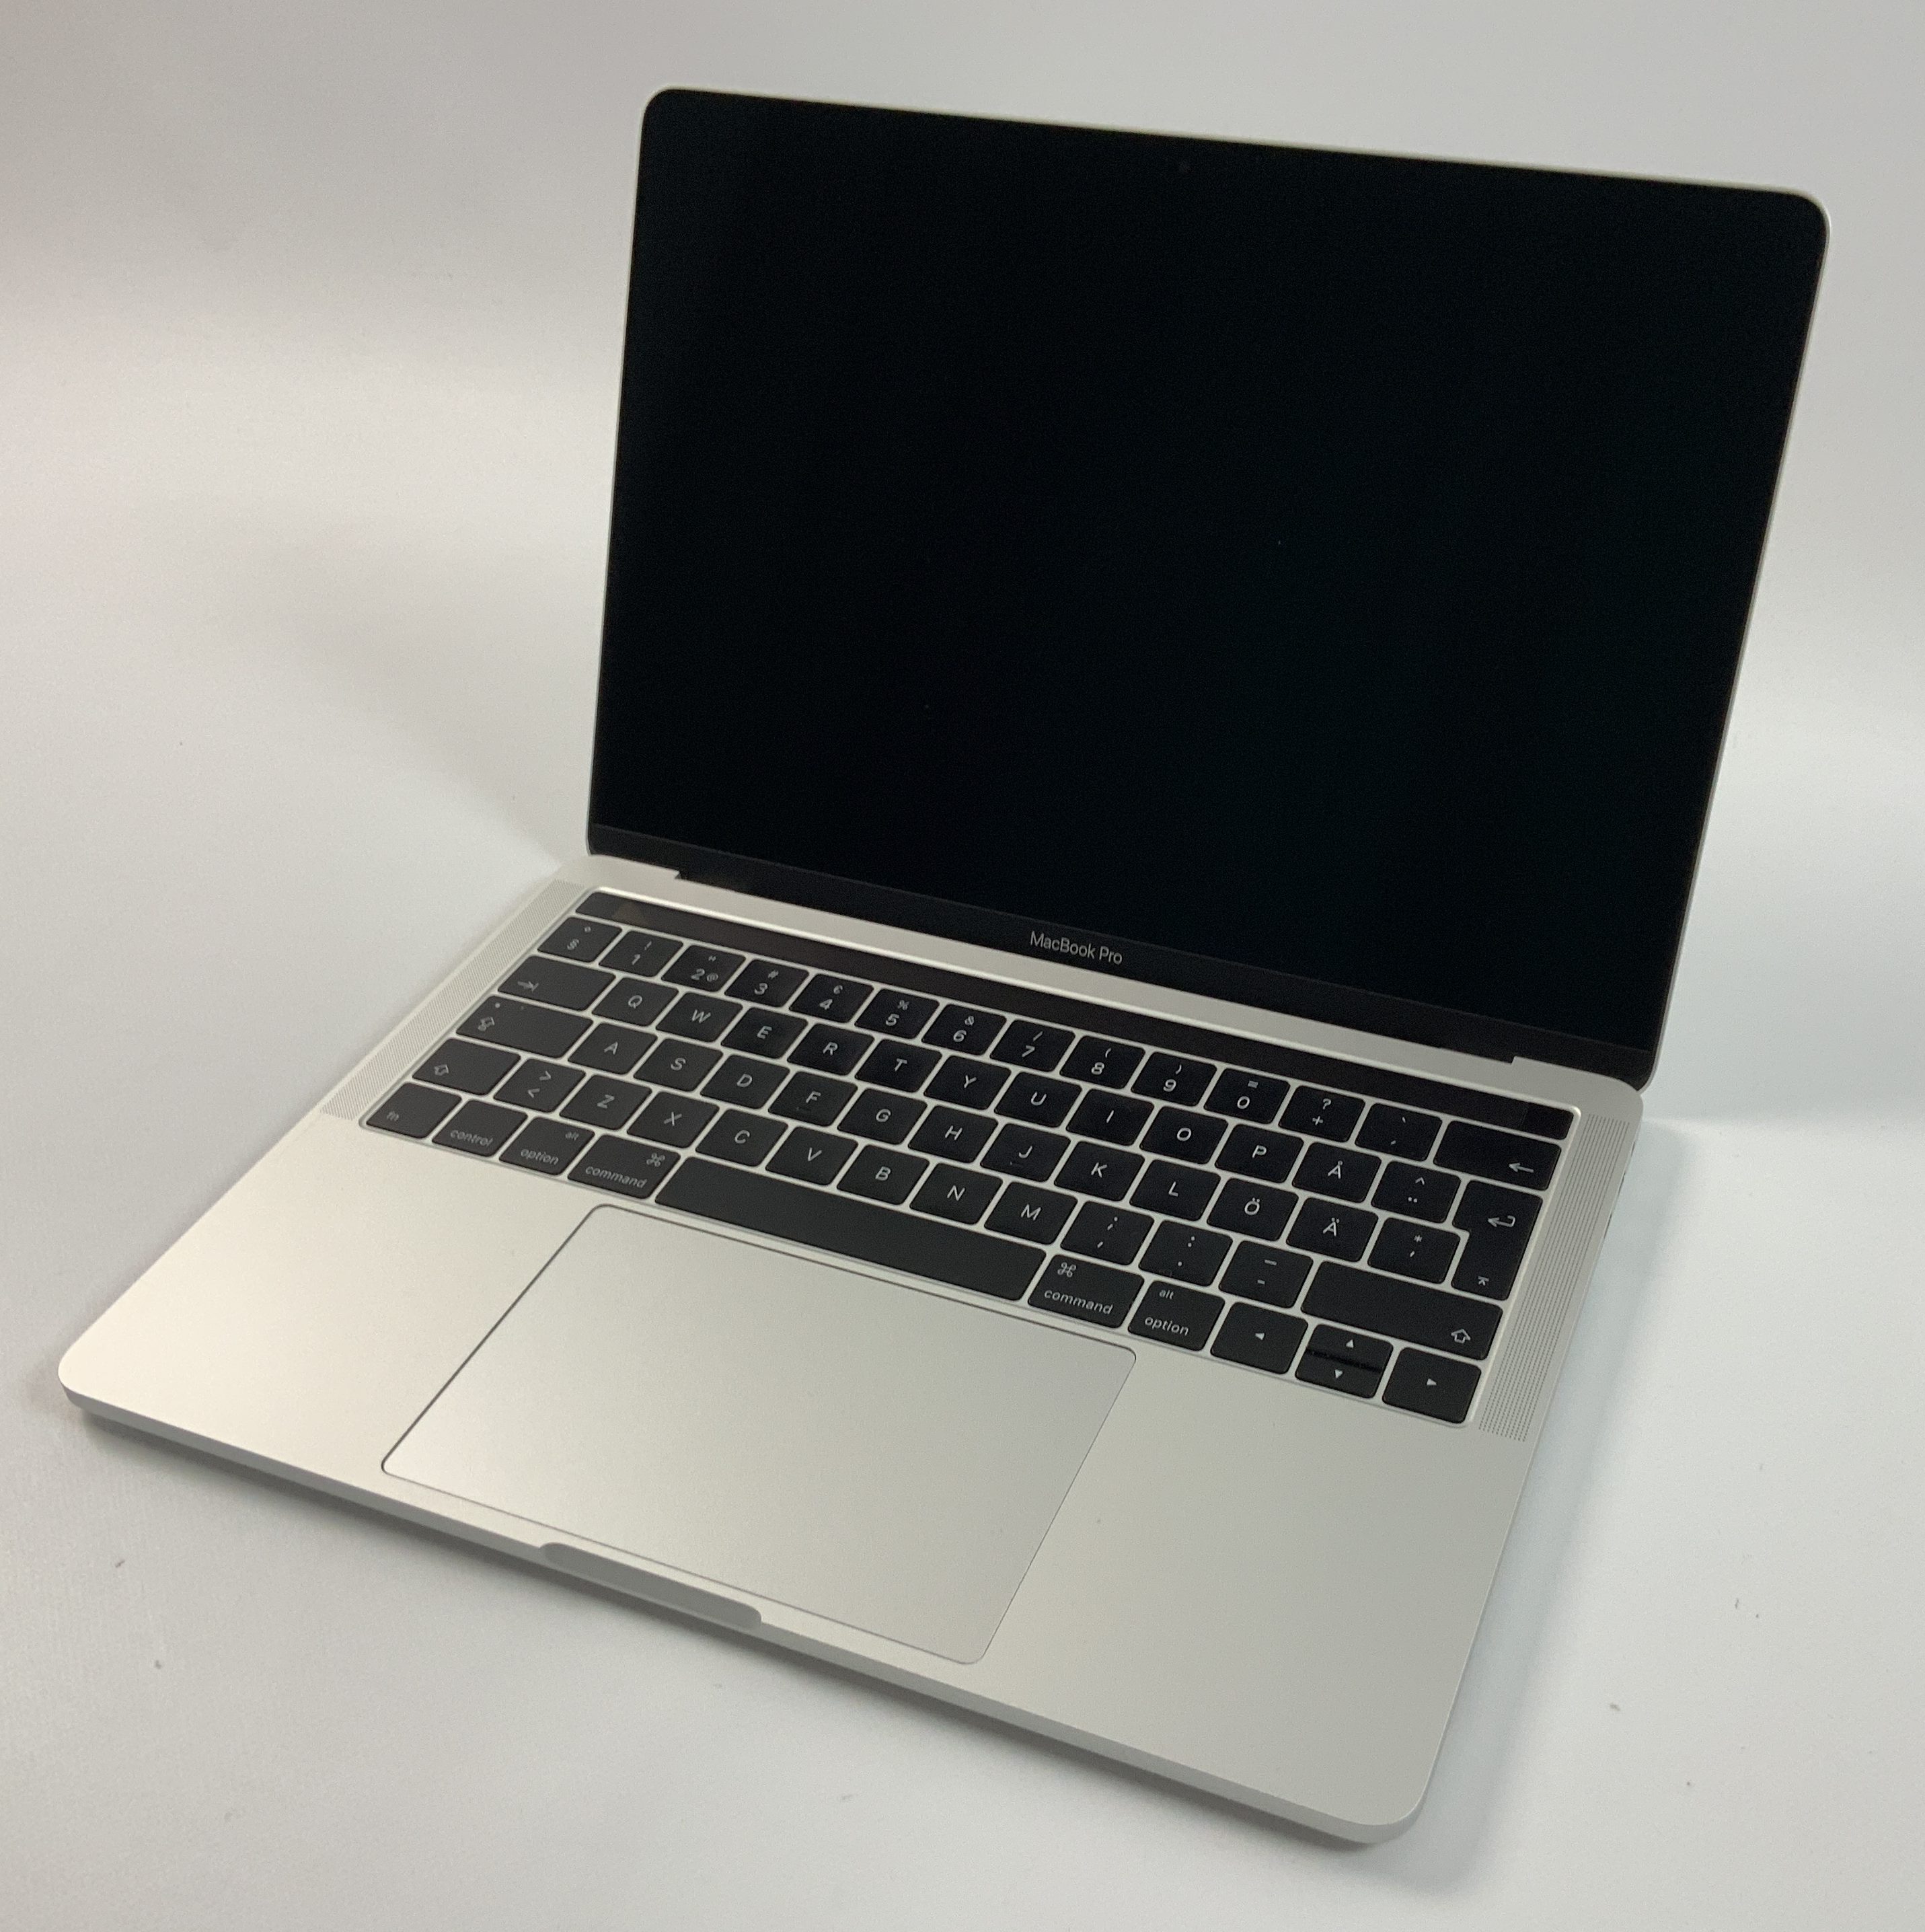 MacBook Pro 13" 4TBT Late 2016 (Intel Core i5 2.9 GHz 16 GB RAM 256 GB SSD), Silver, Intel Core i5 2.9 GHz, 16 GB RAM, 256 GB SSD, Bild 1